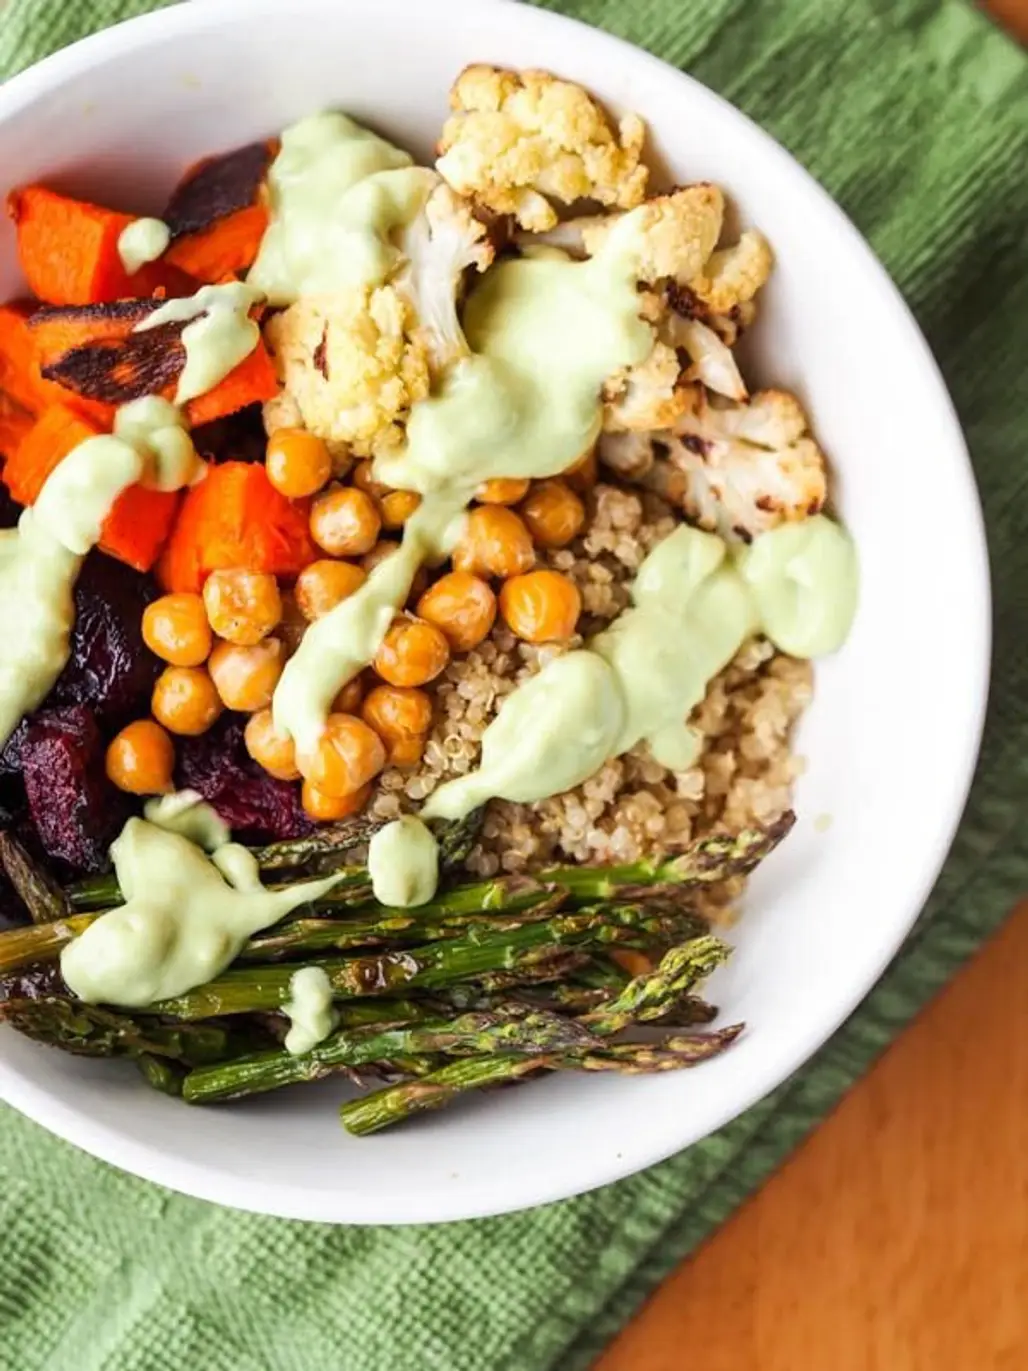 Vegan Quinoa Power Bowls with Roasted Veggies and Avocado Sauce